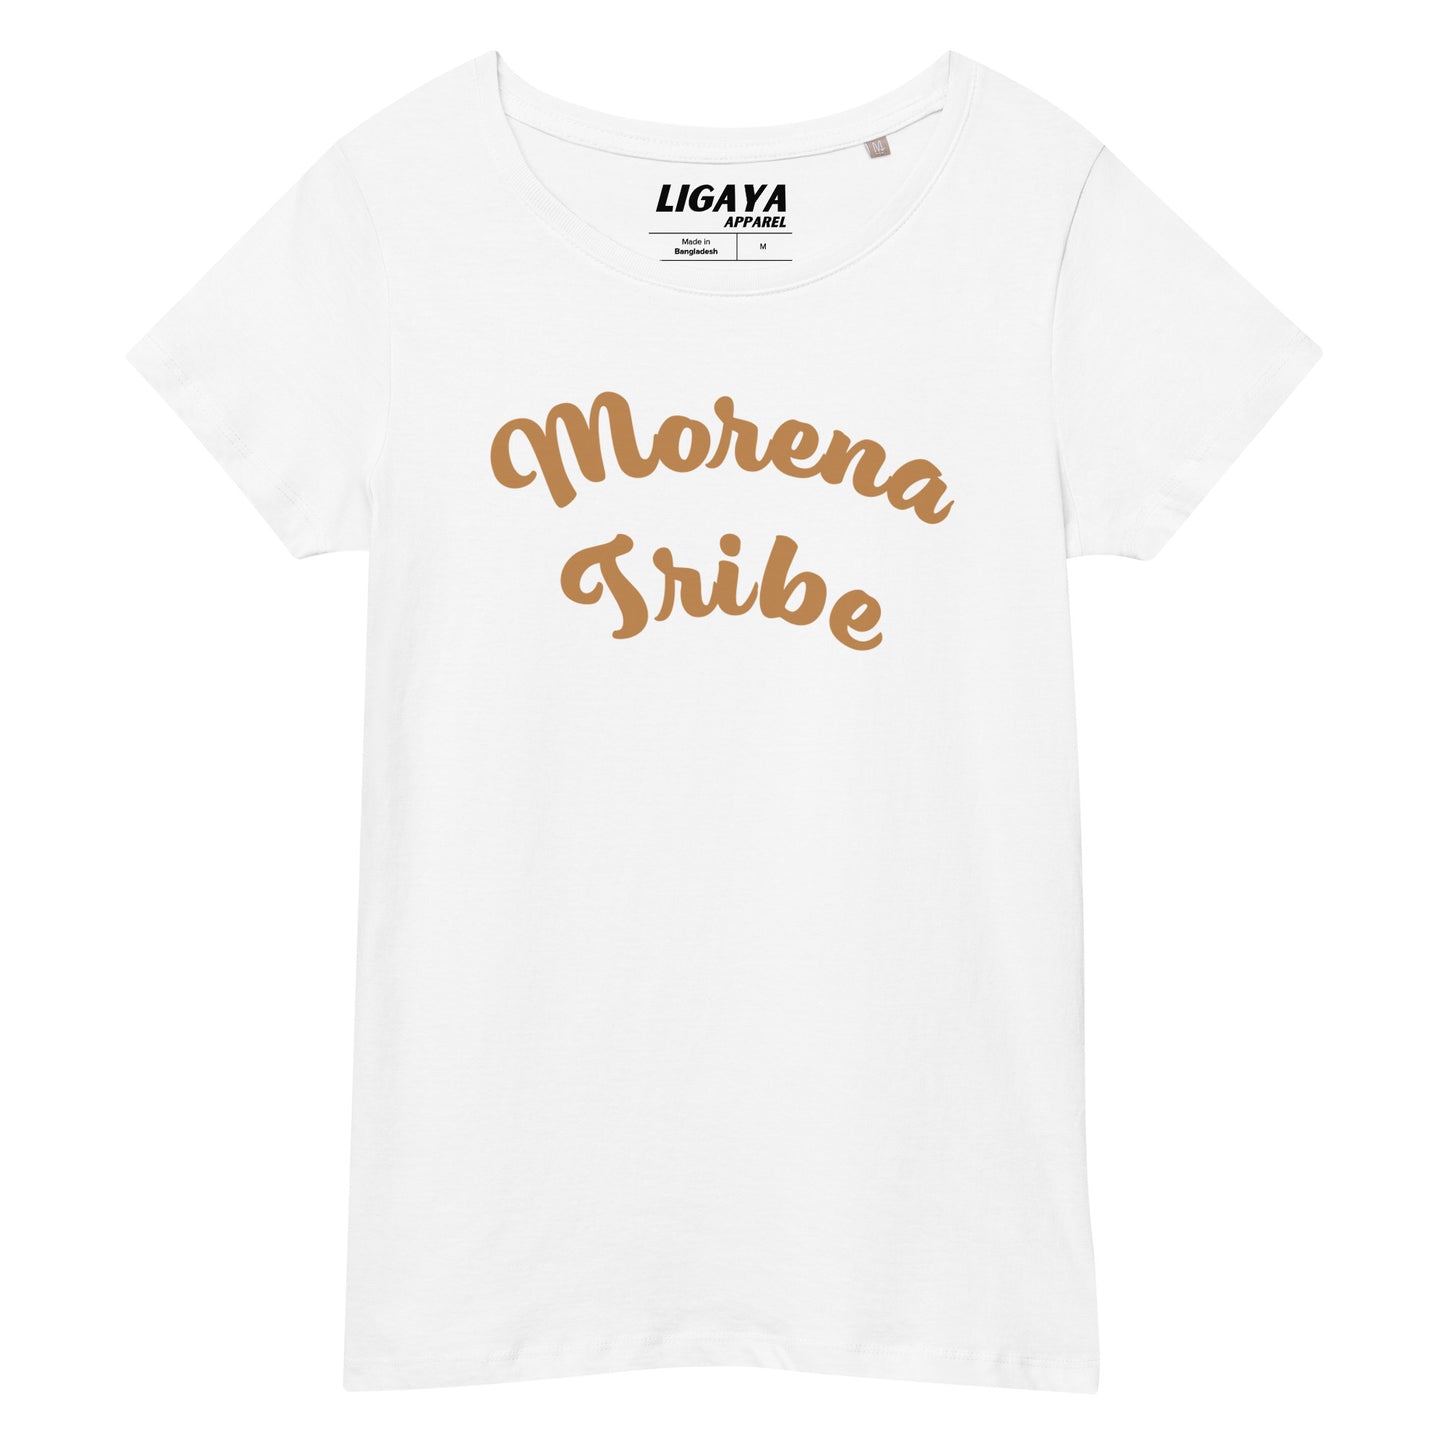 Morena Tribe Woman T-Shirt I Organic Cotton